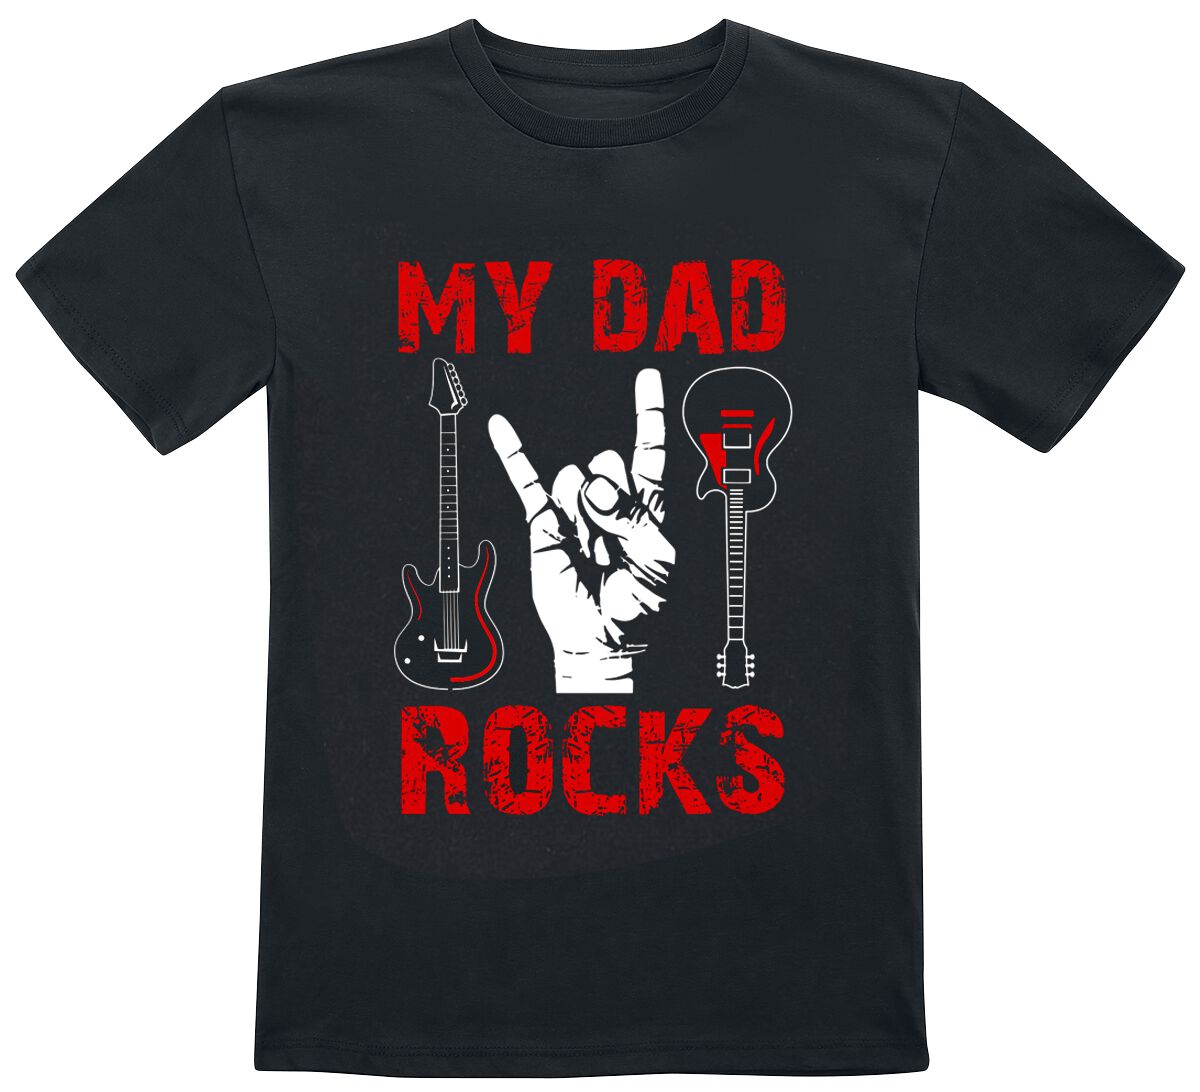 Family & Friends My Dad Rocks - Kids - My Dad Rocks T-Shirt black